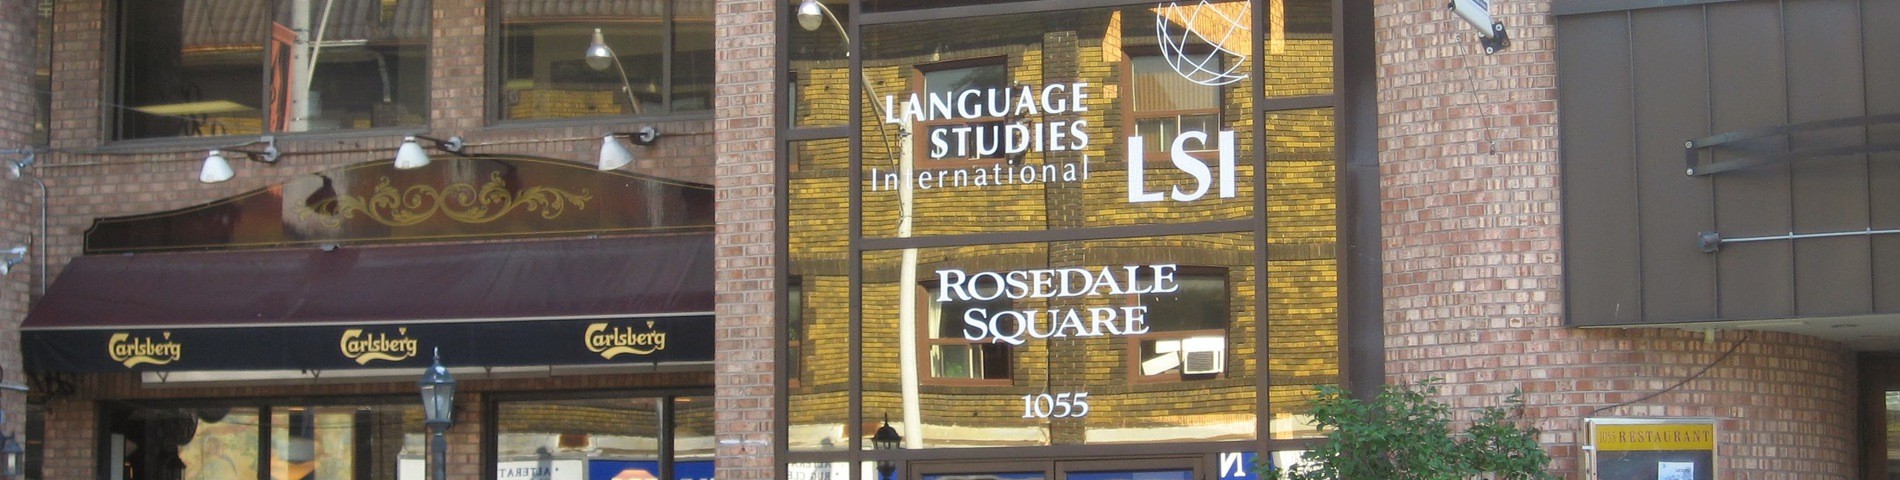 LSI - Language Studies International foto 1